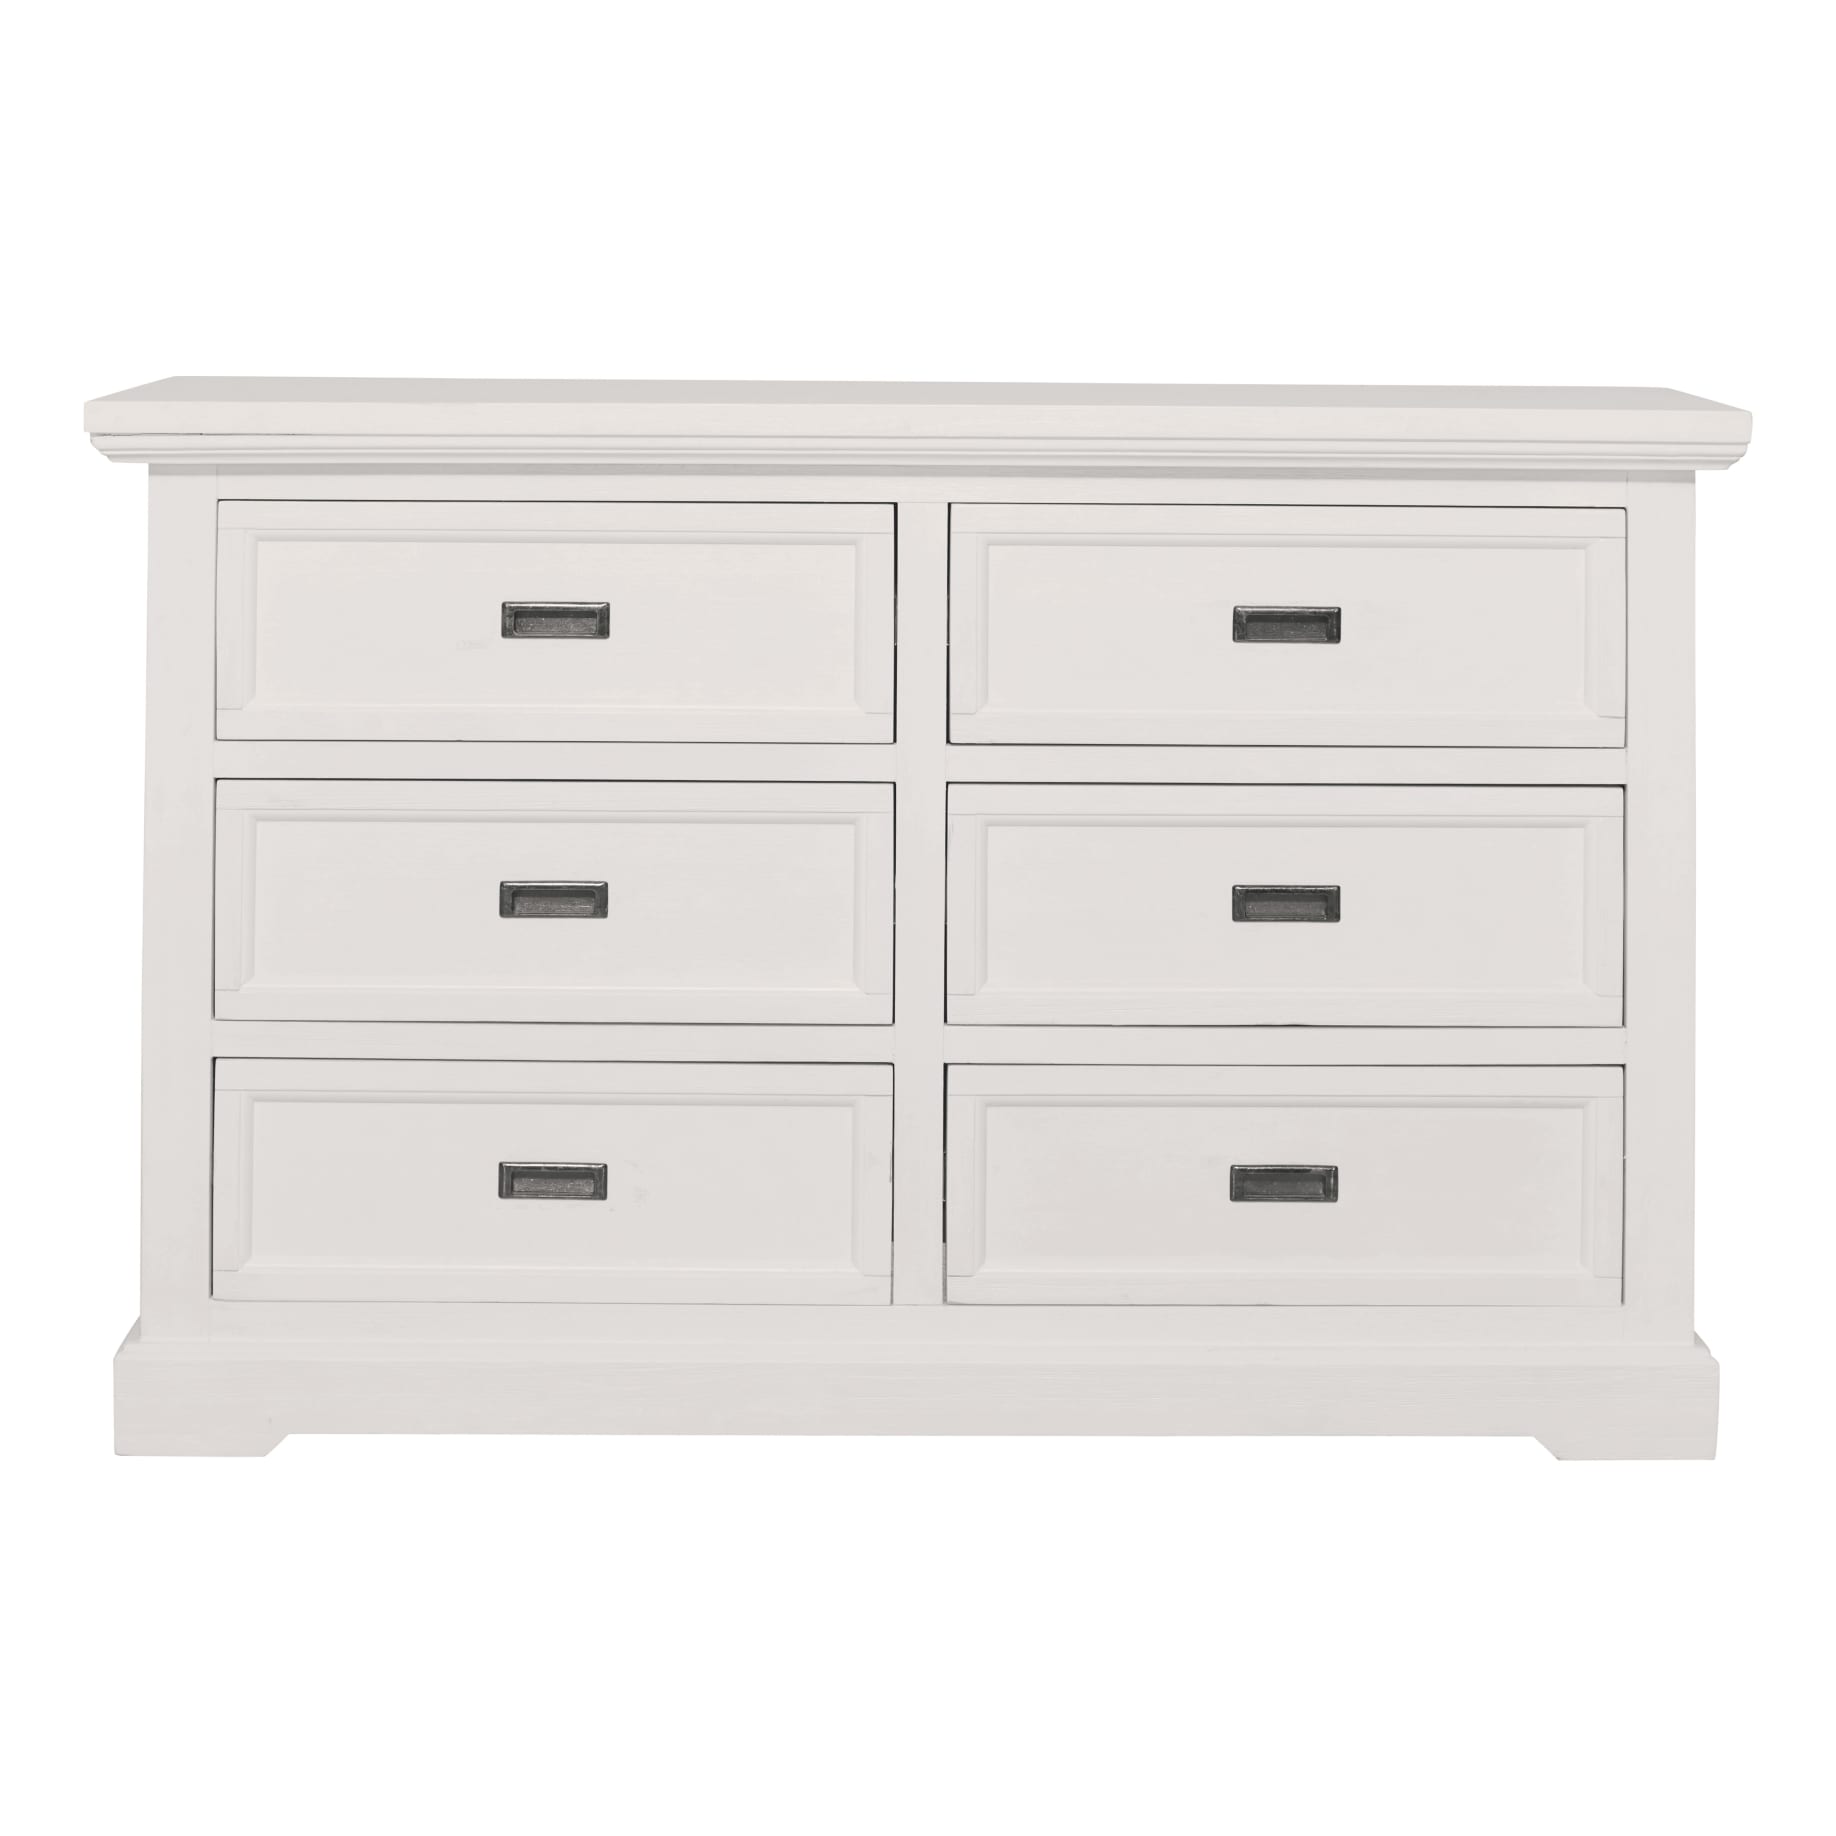 Hamptons Dresser Only in White